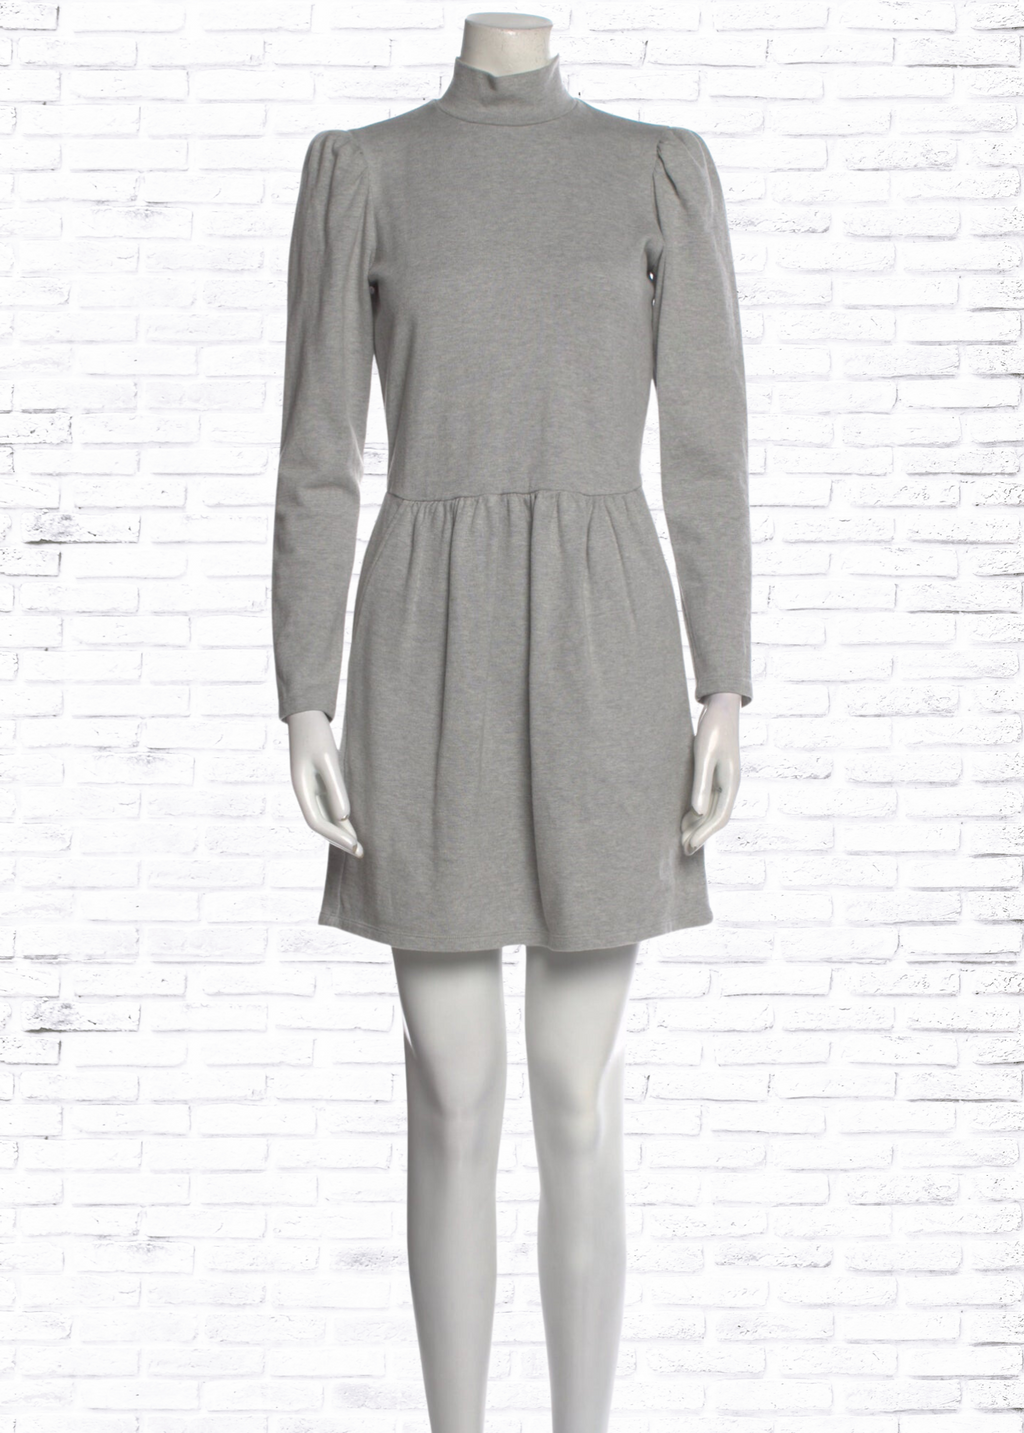 La Vie Rebecca Taylor Mock-Neck Mini Dress w/ Puffed-Sleeves